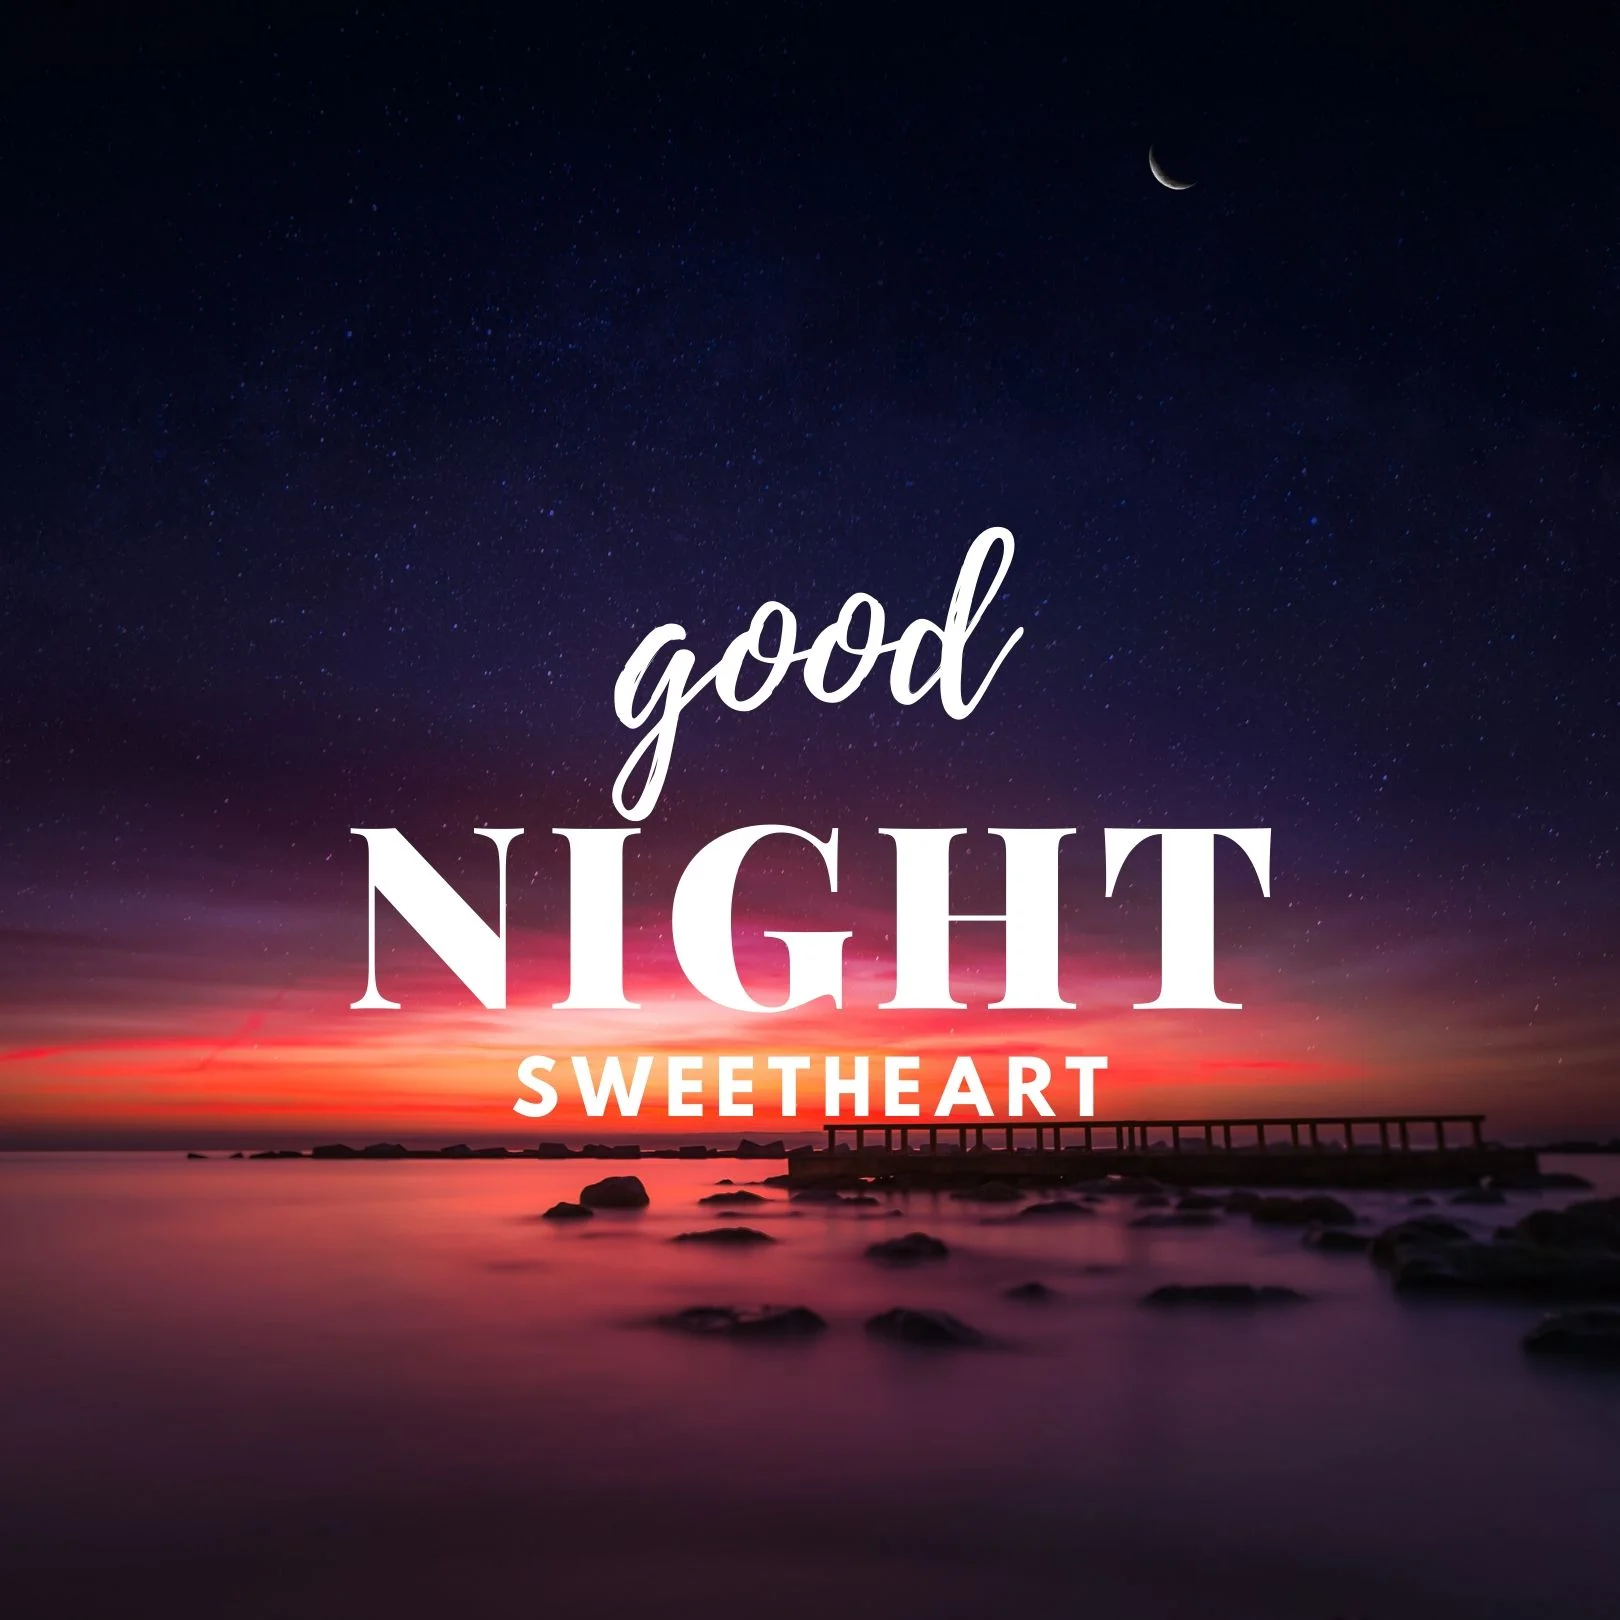 Good Night Sweetheart images